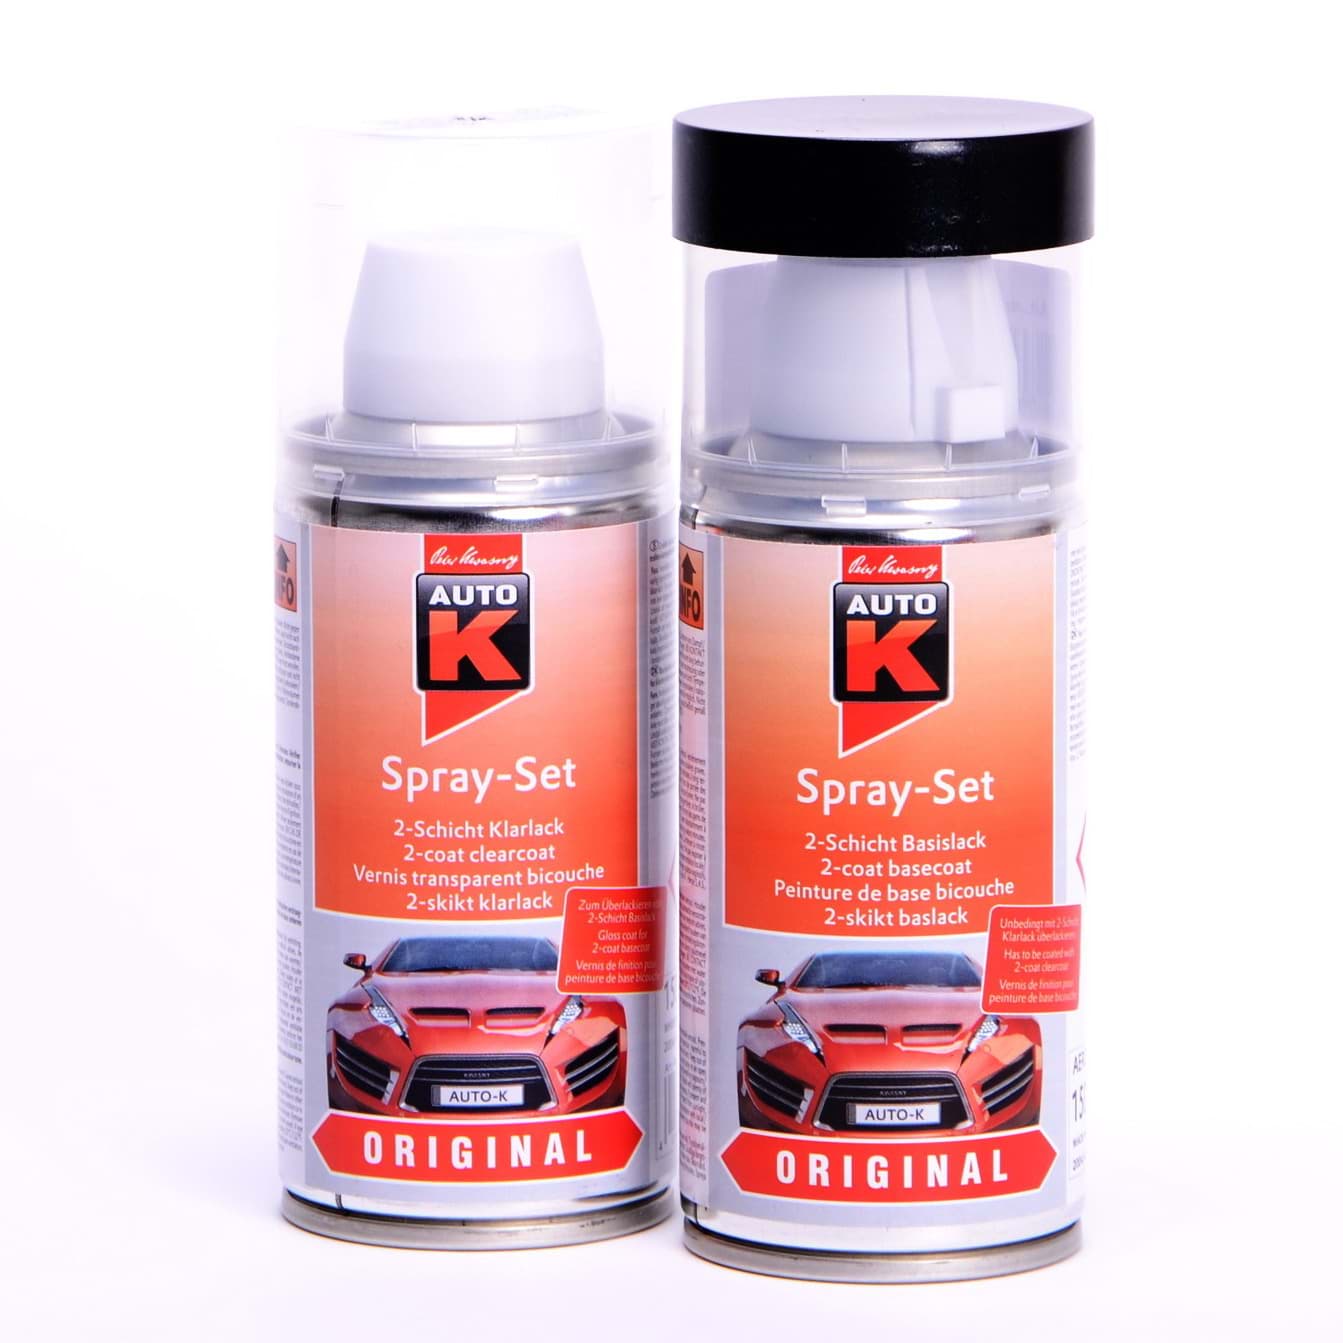 Auto-K Spray-Set Autolack für Opel 168 Metro Blau met 21473 resmi